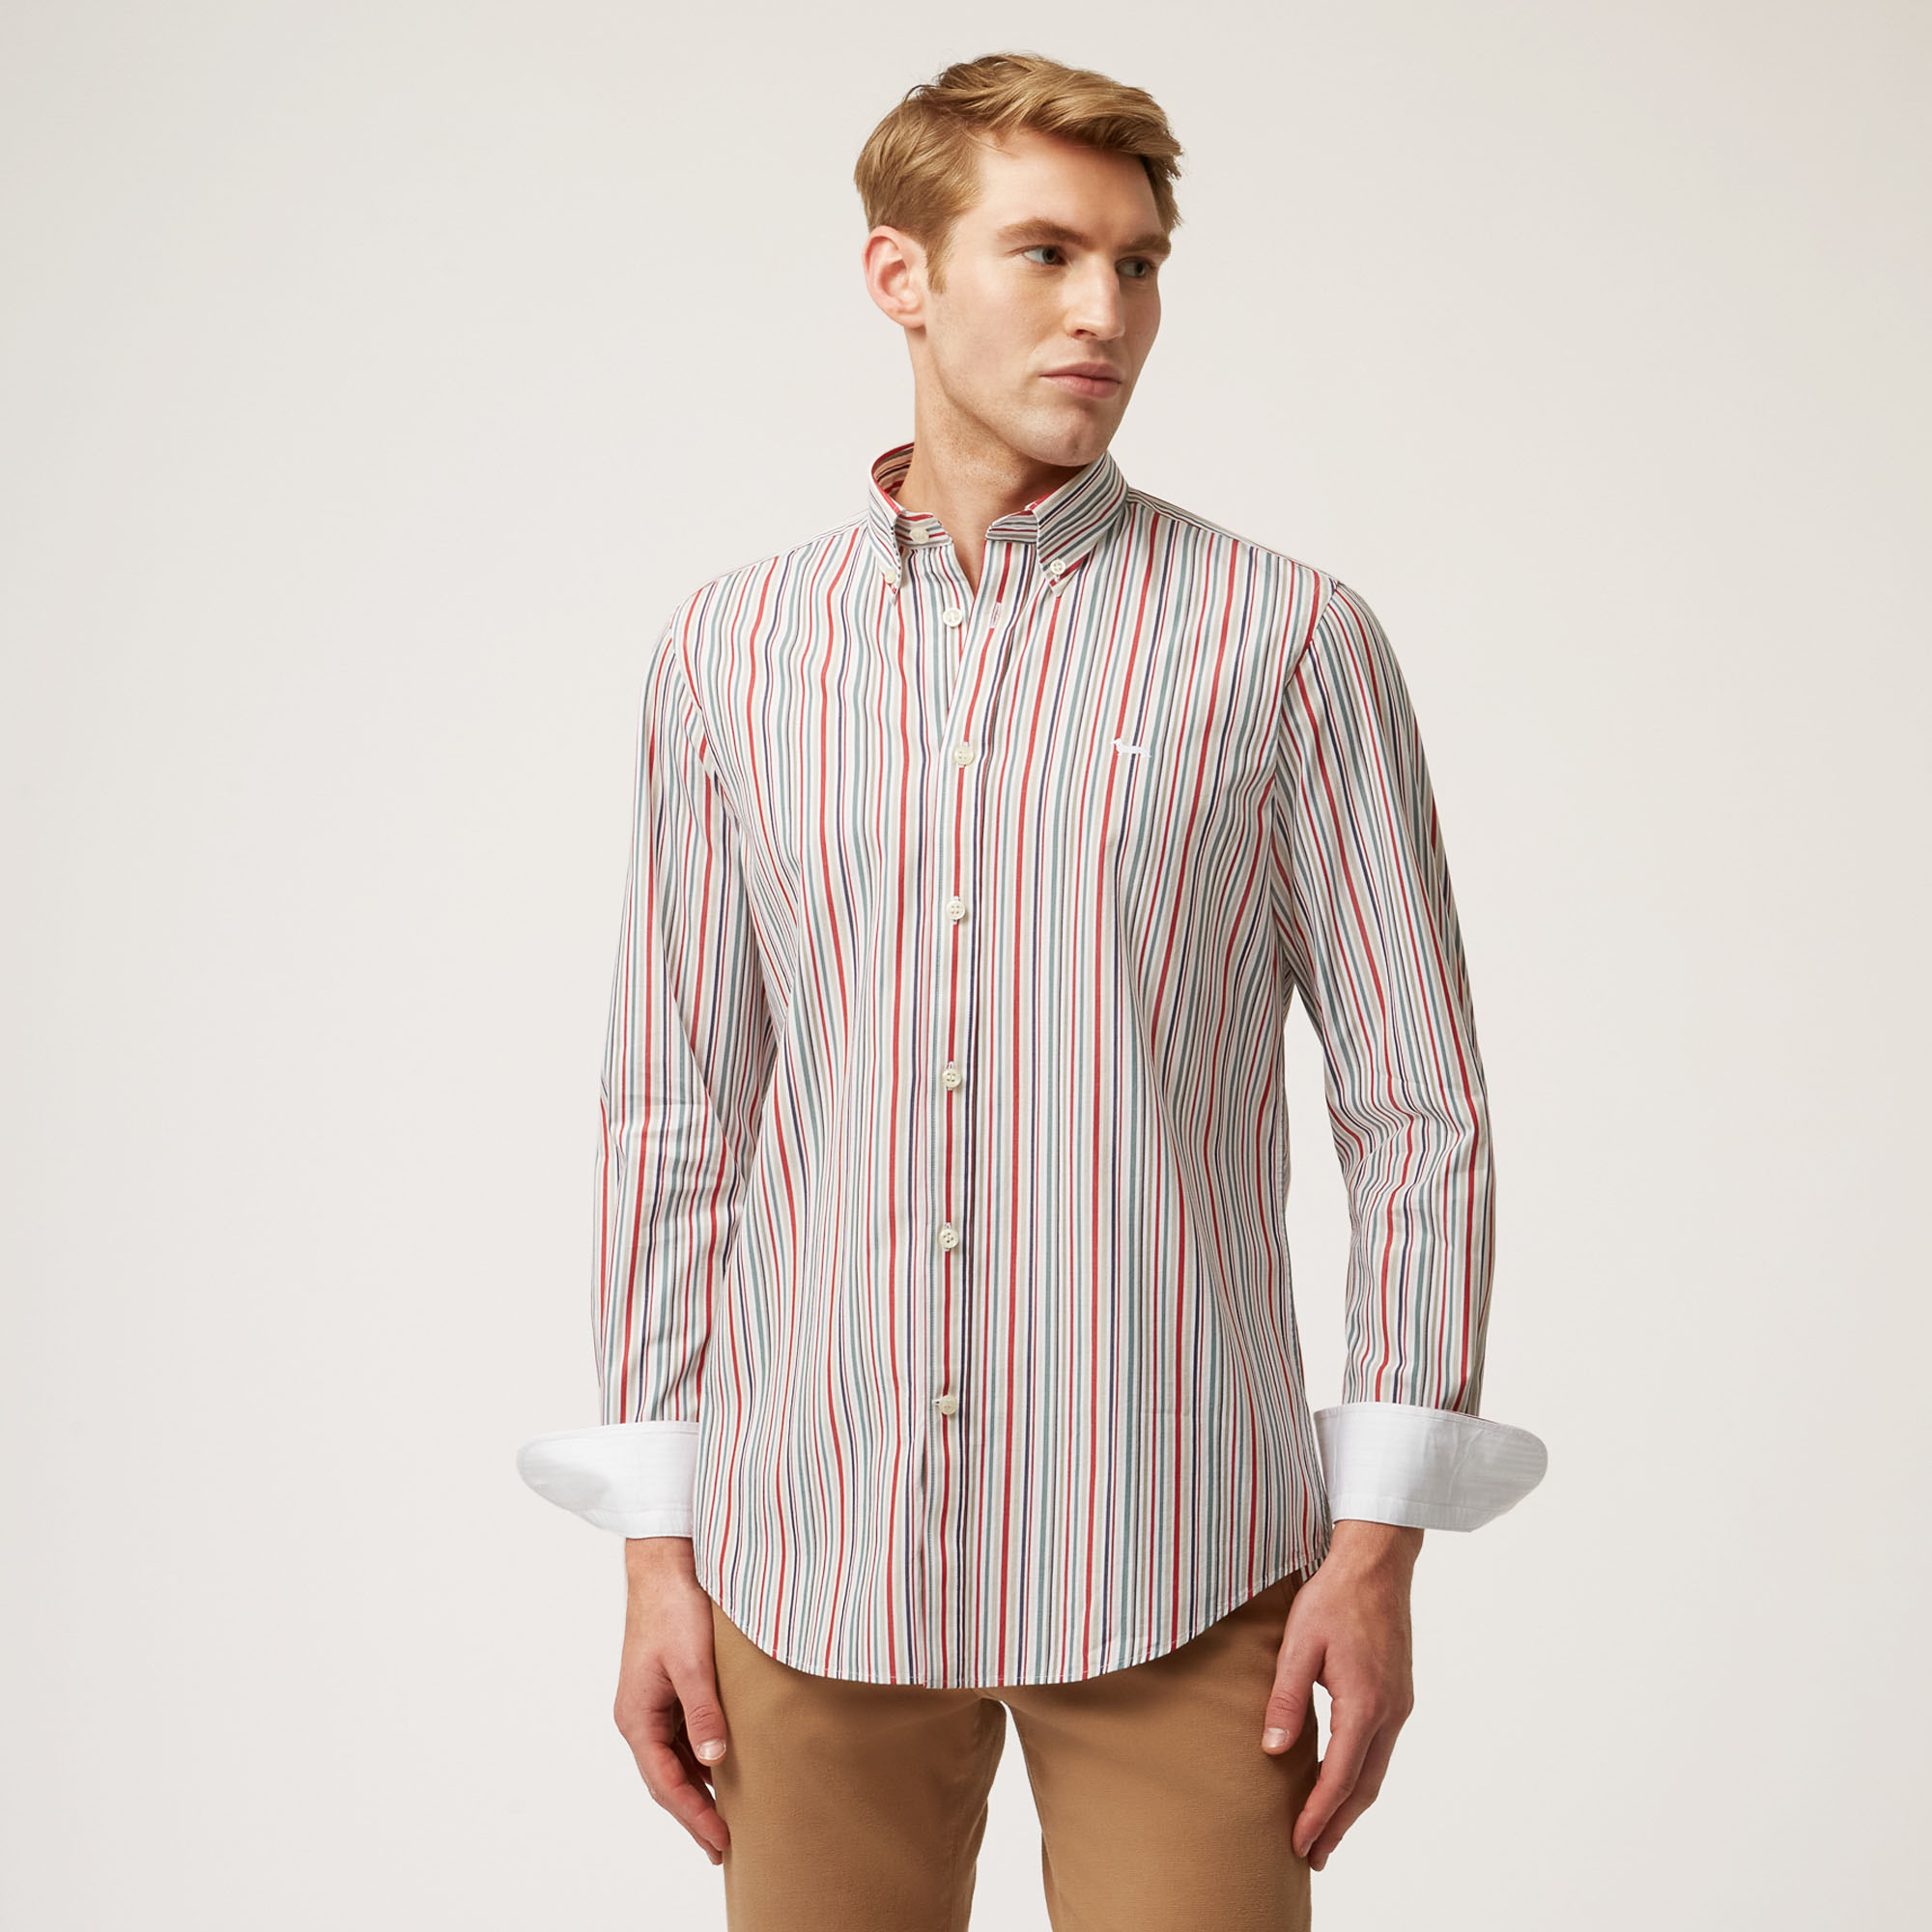 Art Academy Striped Organic Cotton Shirt, Red, large